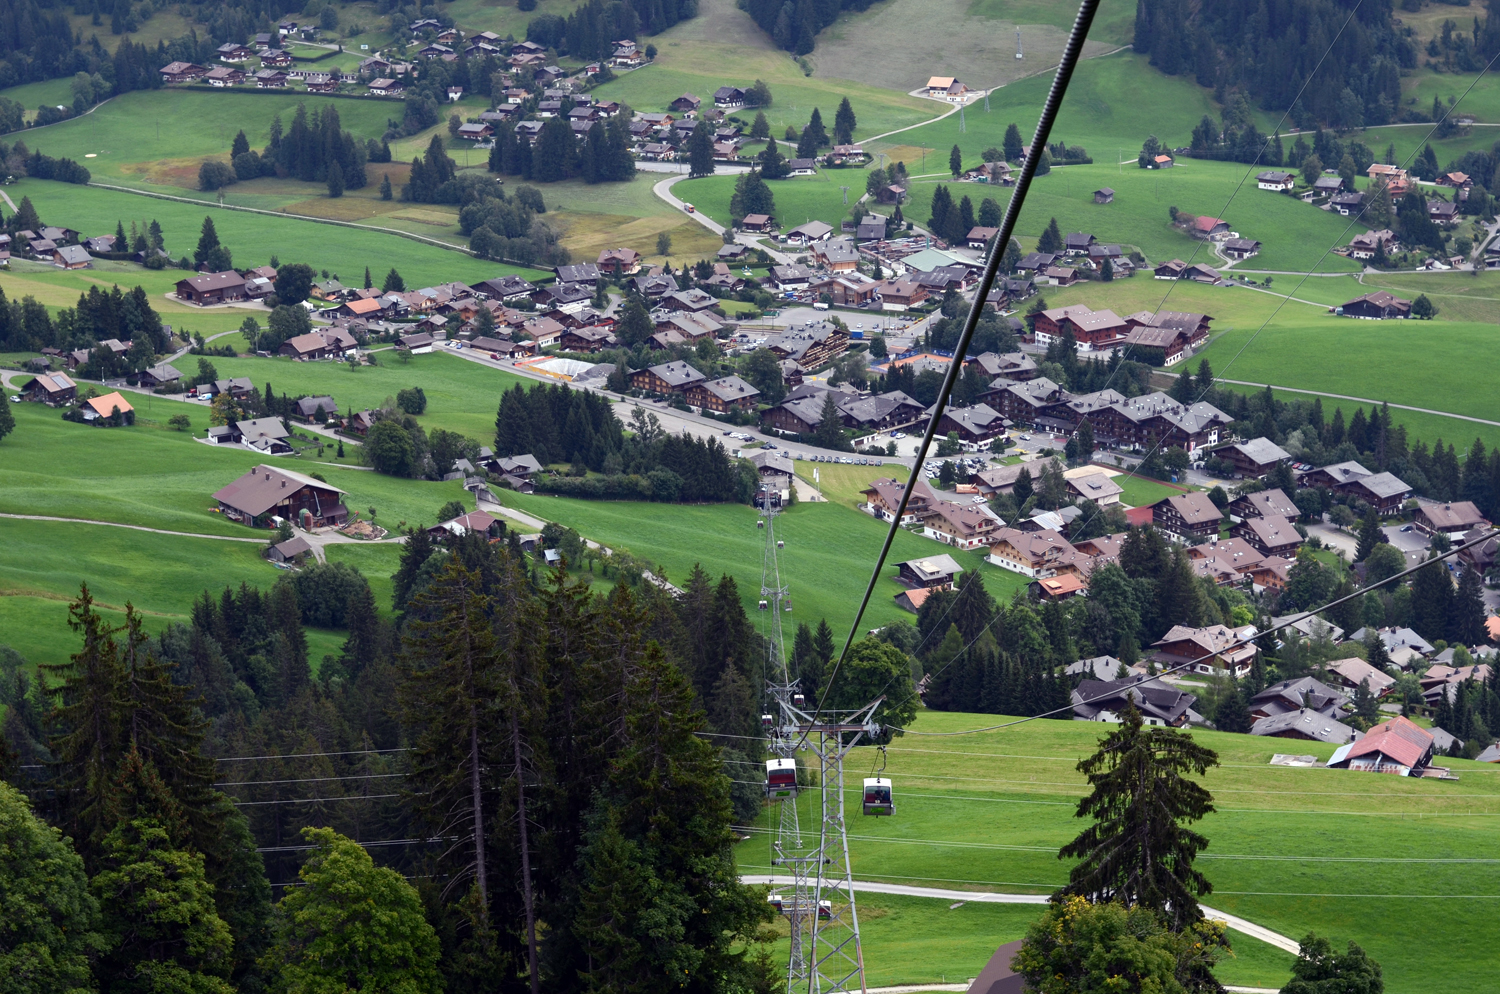 mercredie-blog-blogger-geneve-suisse-voyage-my-switzerland-grand-tour-roadtrip-europcar-accor-paysage-view-pre-prairie-montains-montagne-gstaad